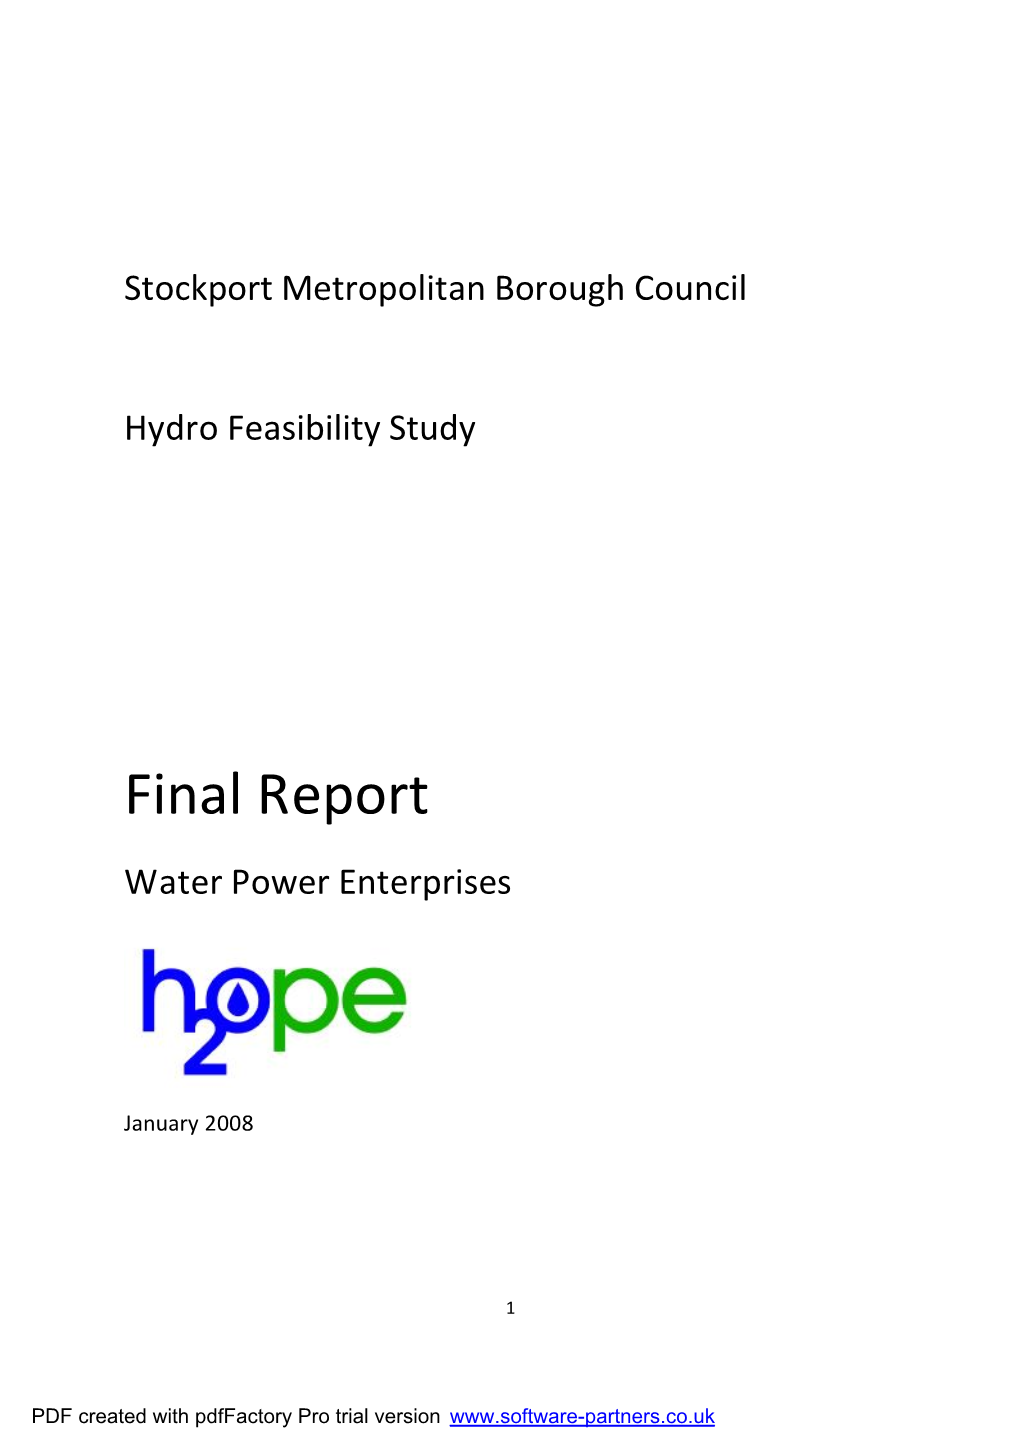 Final Report Water Power Enterprises